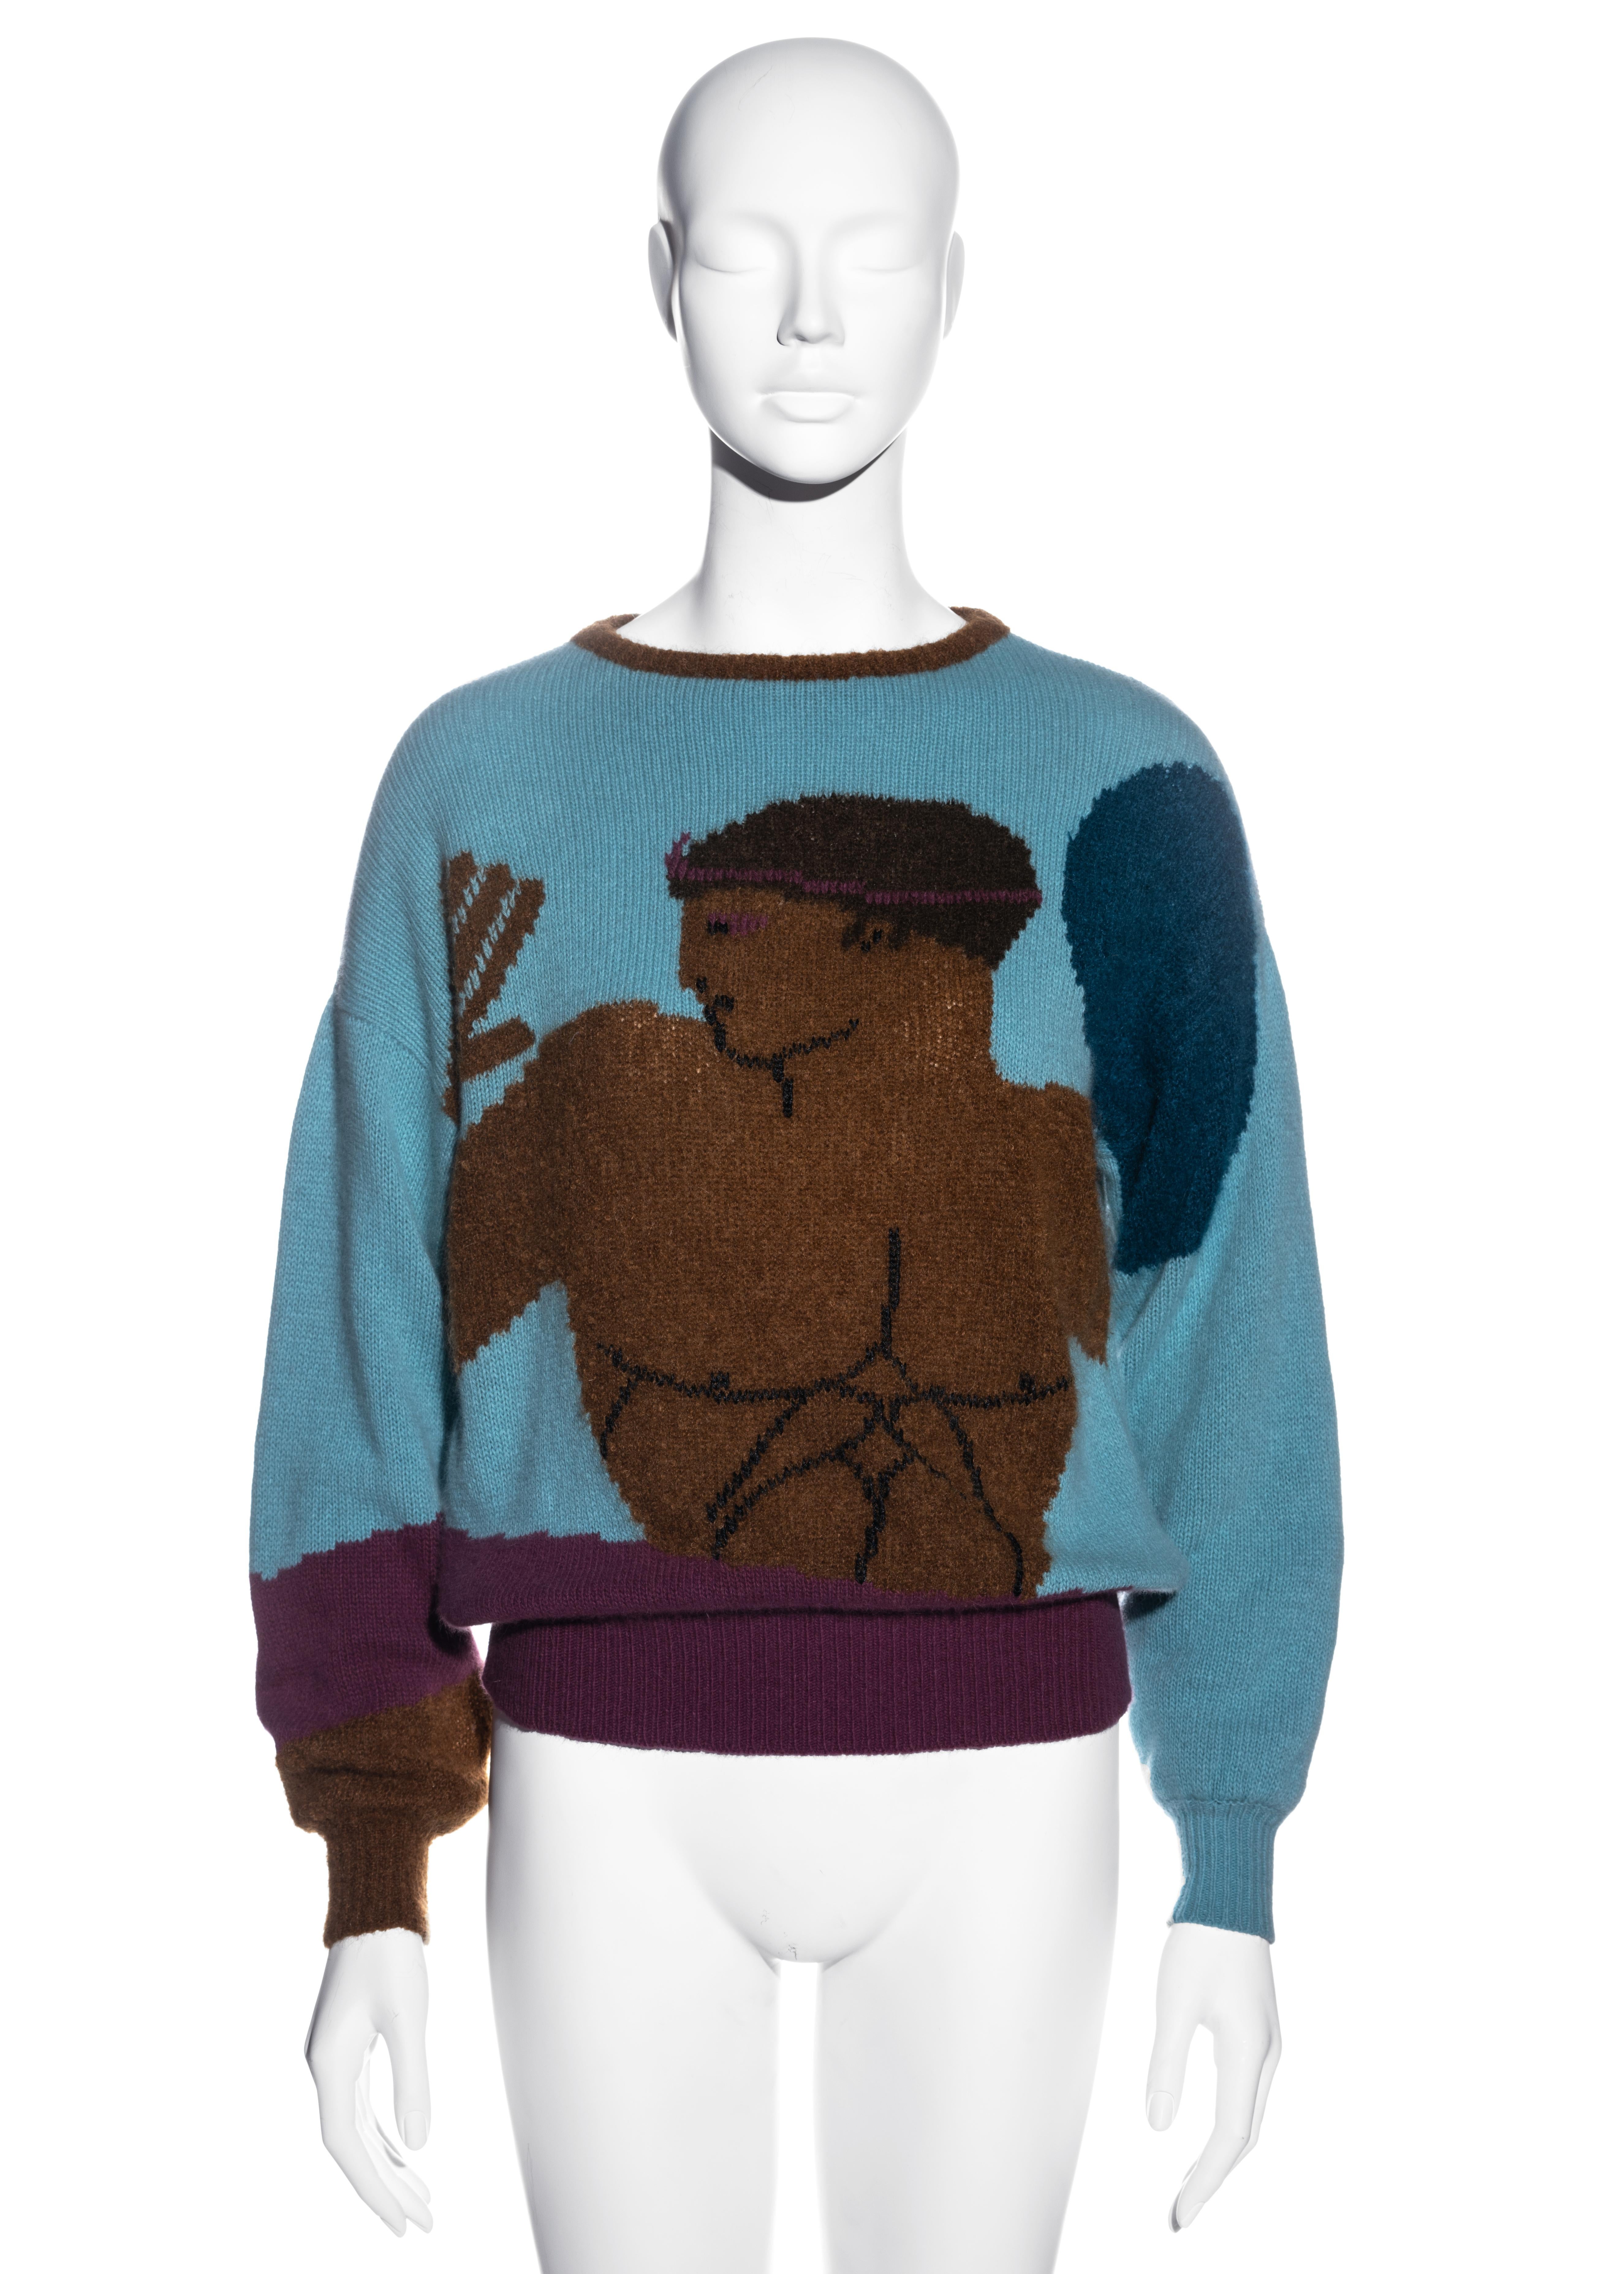 ▪ Gianni Versace multicoloured knitted sweater
▪ 49% Wool, 27% Mohair, 17% Angora, 7% Nylon
▪ Blue, purple and brown
▪ Ancient Greek mythology theme
▪ Medium
▪ Fall-Winter 1982